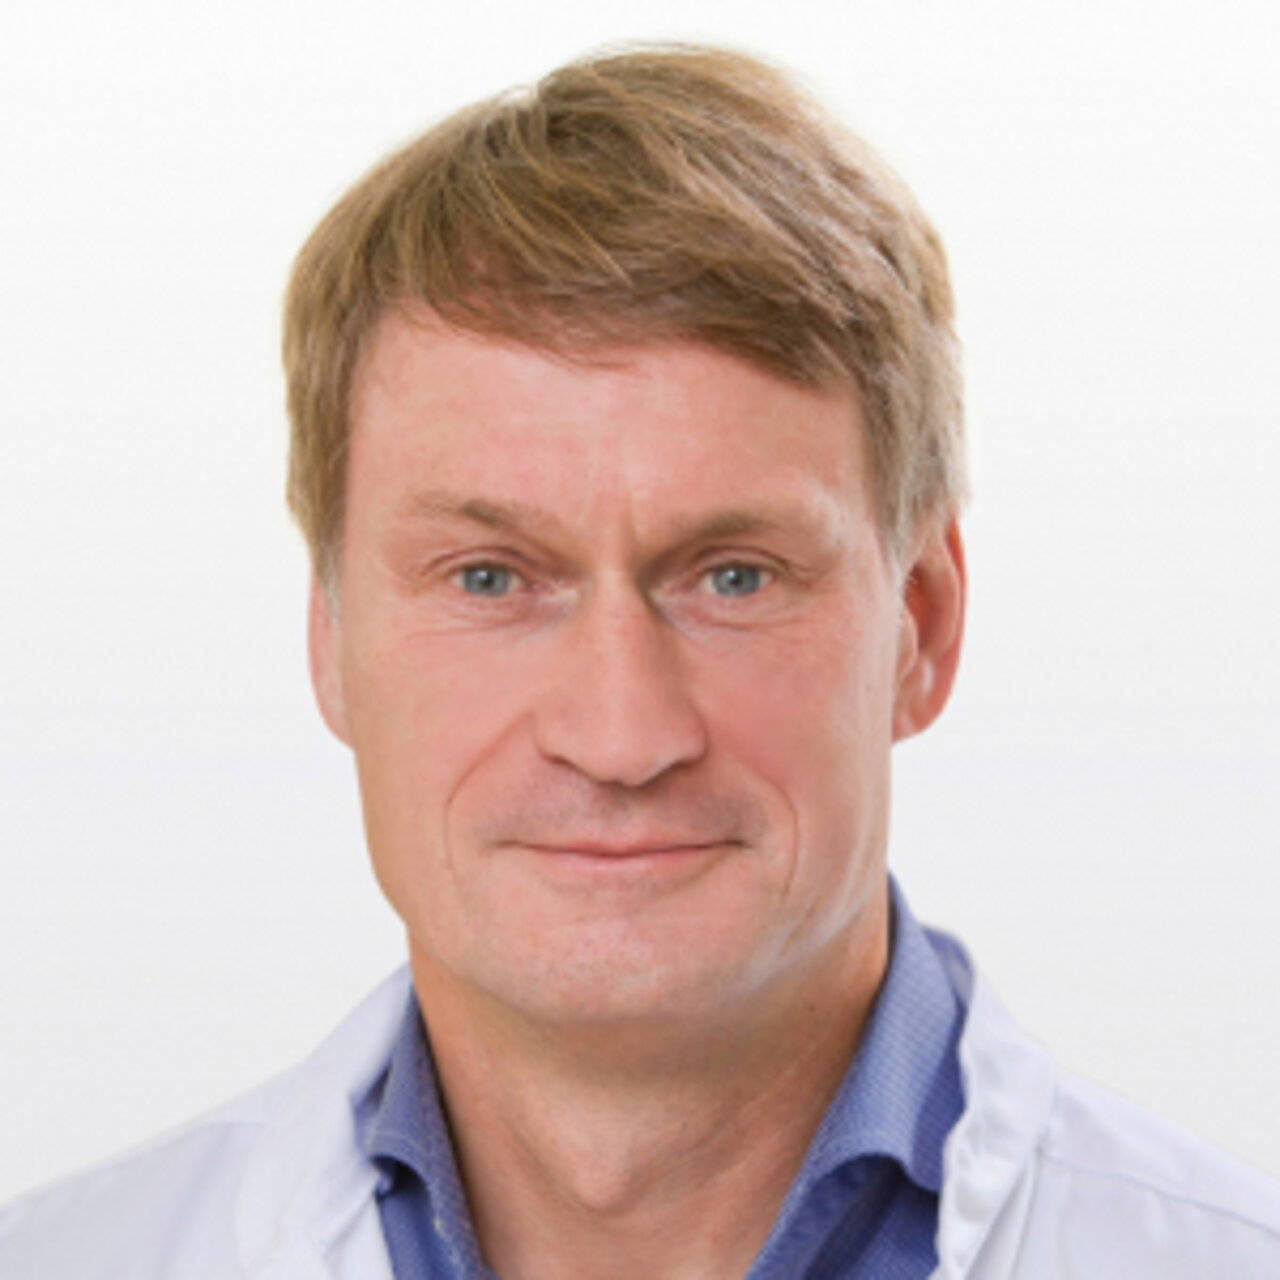 Prof. Dr Veit Rohde - Specialist in Neurosurgery - Portrait